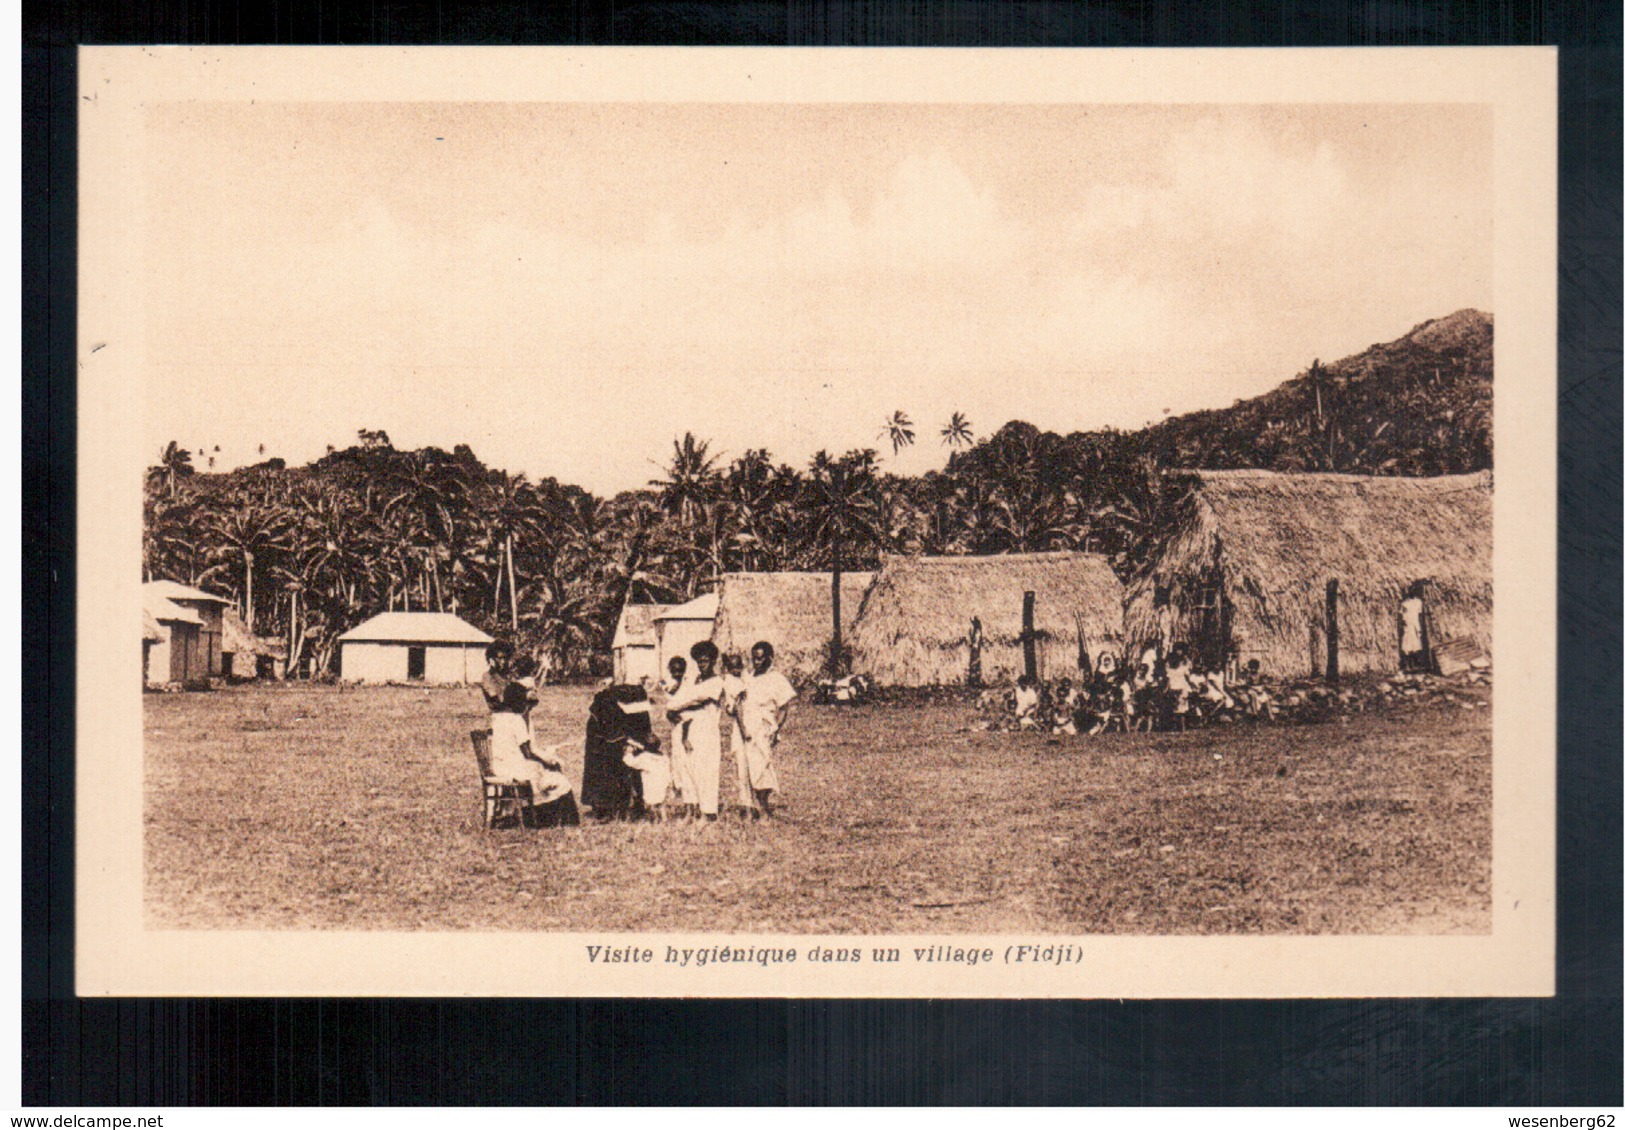 FIDJI Visite Hygiénique Dans Un Village Old Postcard (2) - Fidji